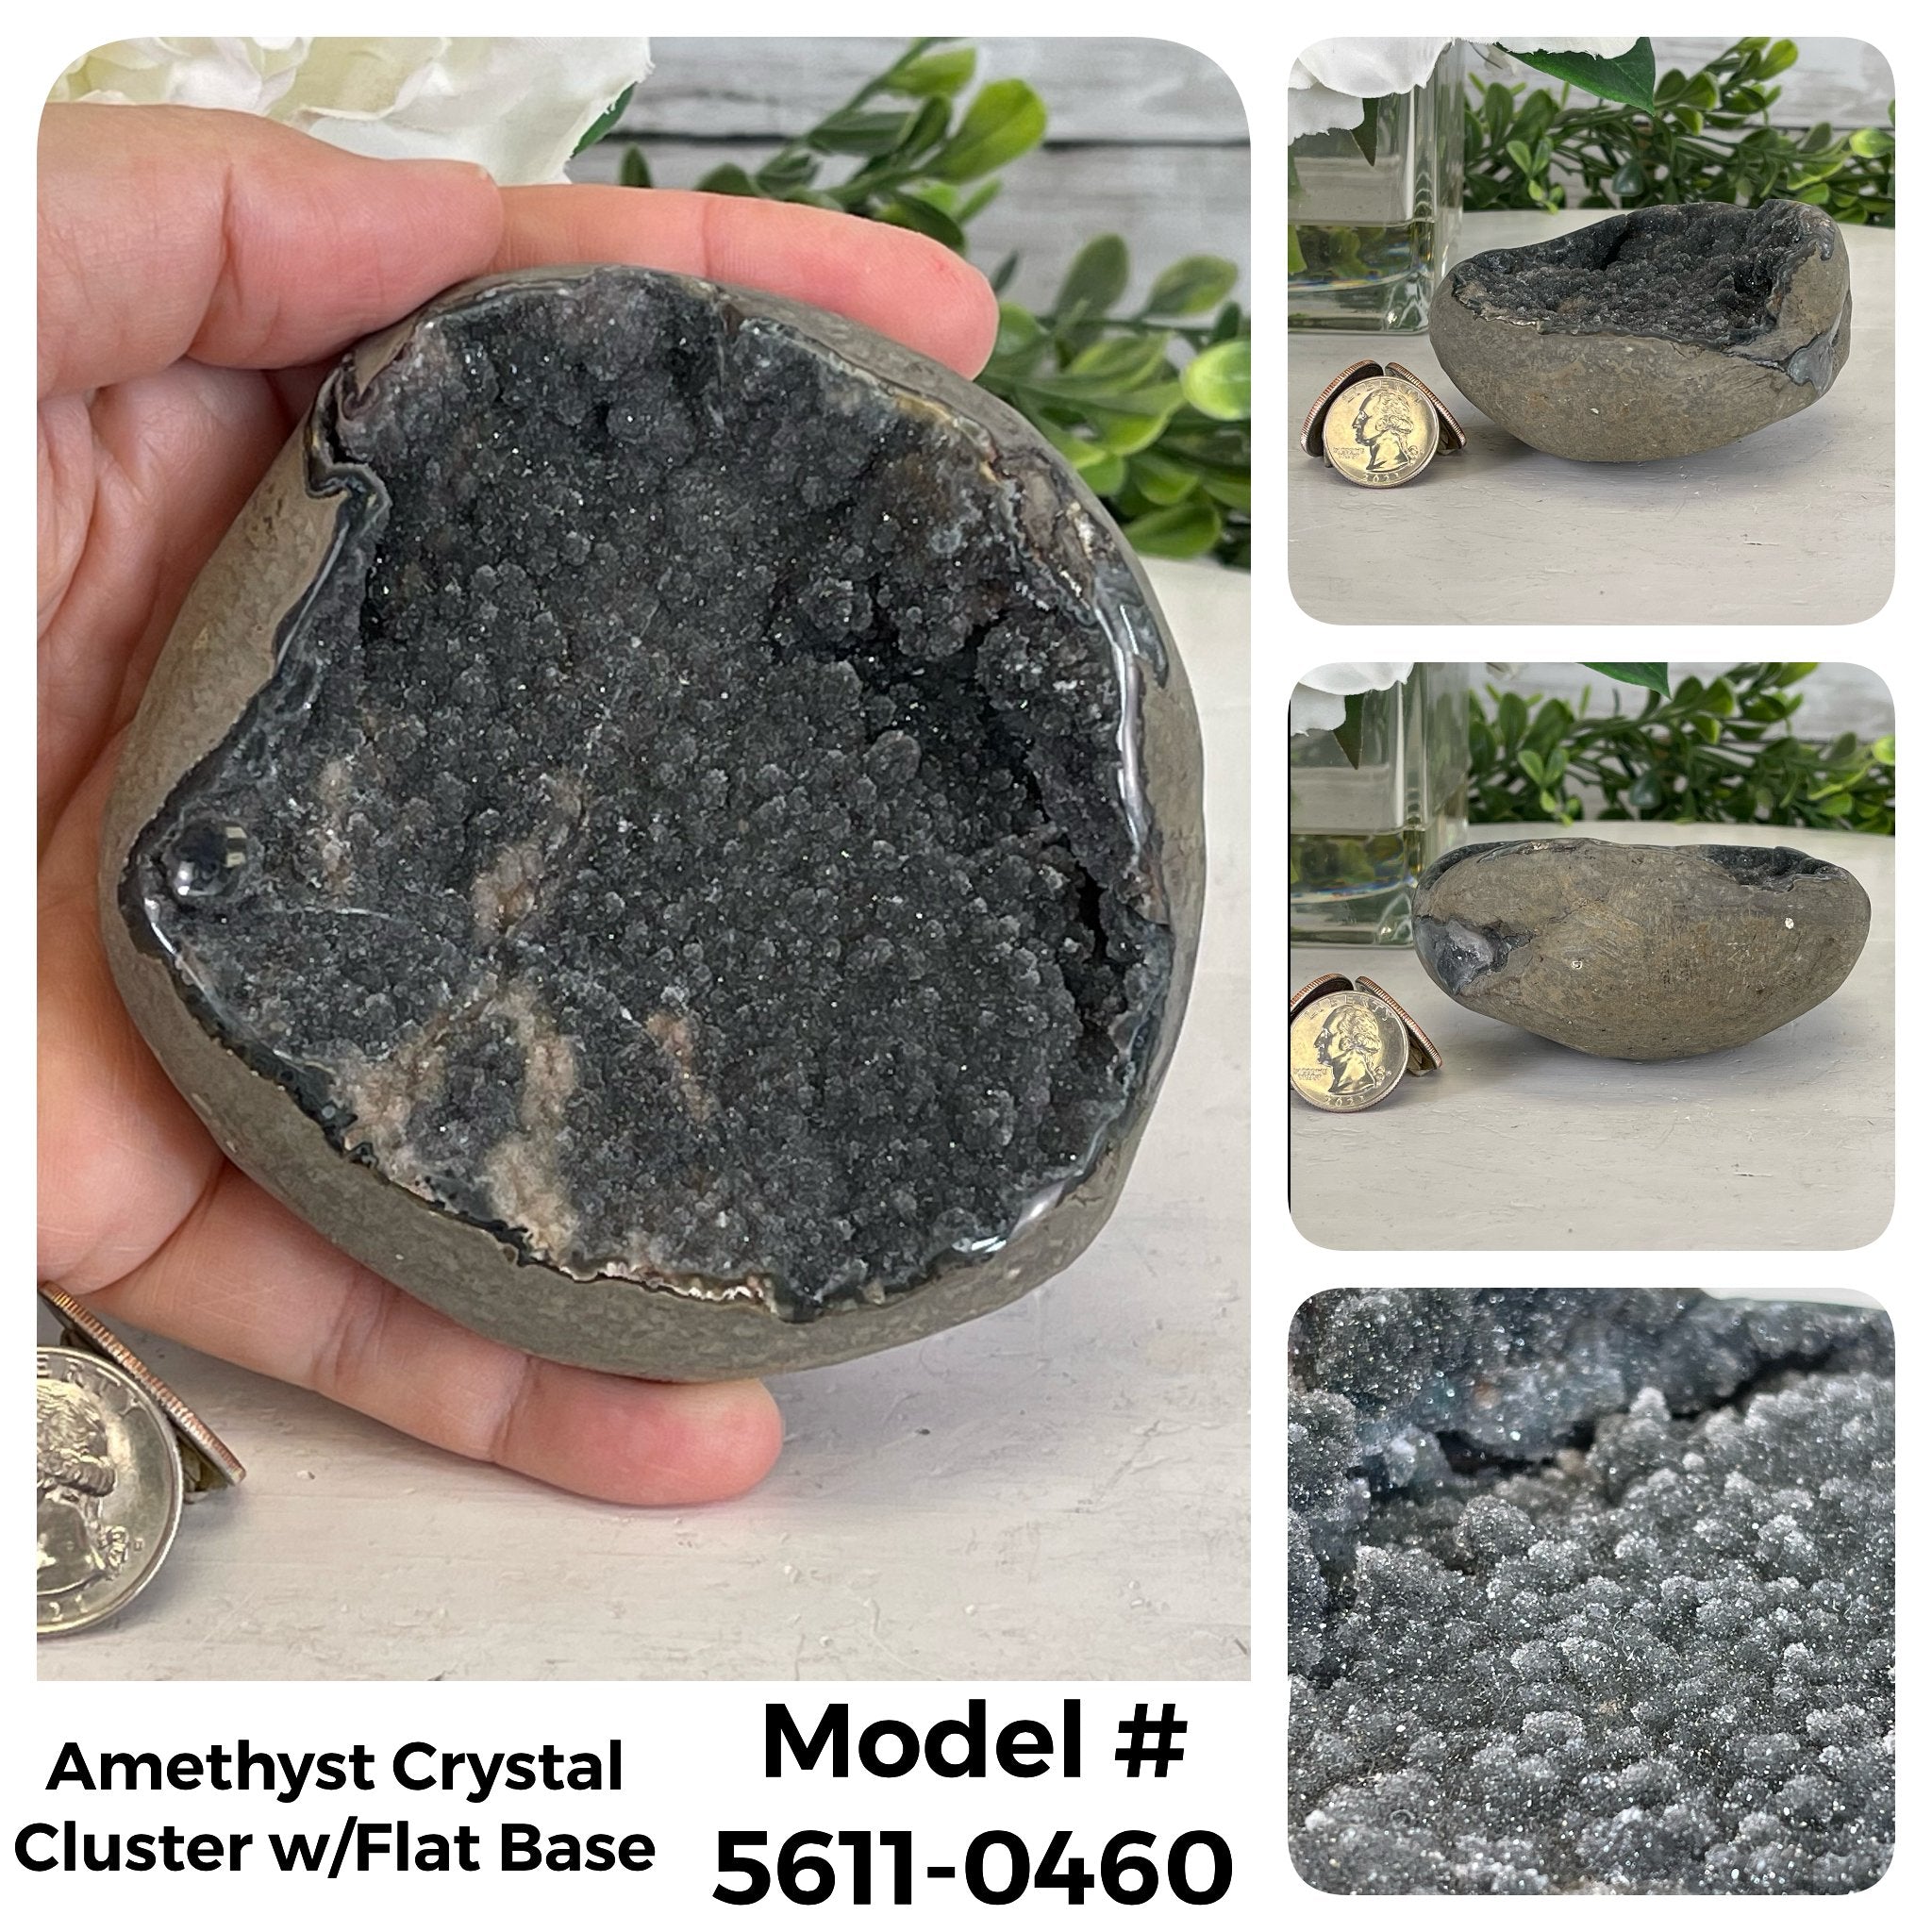 Small Super Quality Amethyst Crystal Cluster w/ flat base, Various Options #5611SQ - Brazil GemsBrazil GemsSmall Super Quality Amethyst Crystal Cluster w/ flat base, Various Options #5611SQSmall Clusters with Flat Bases5611-0460